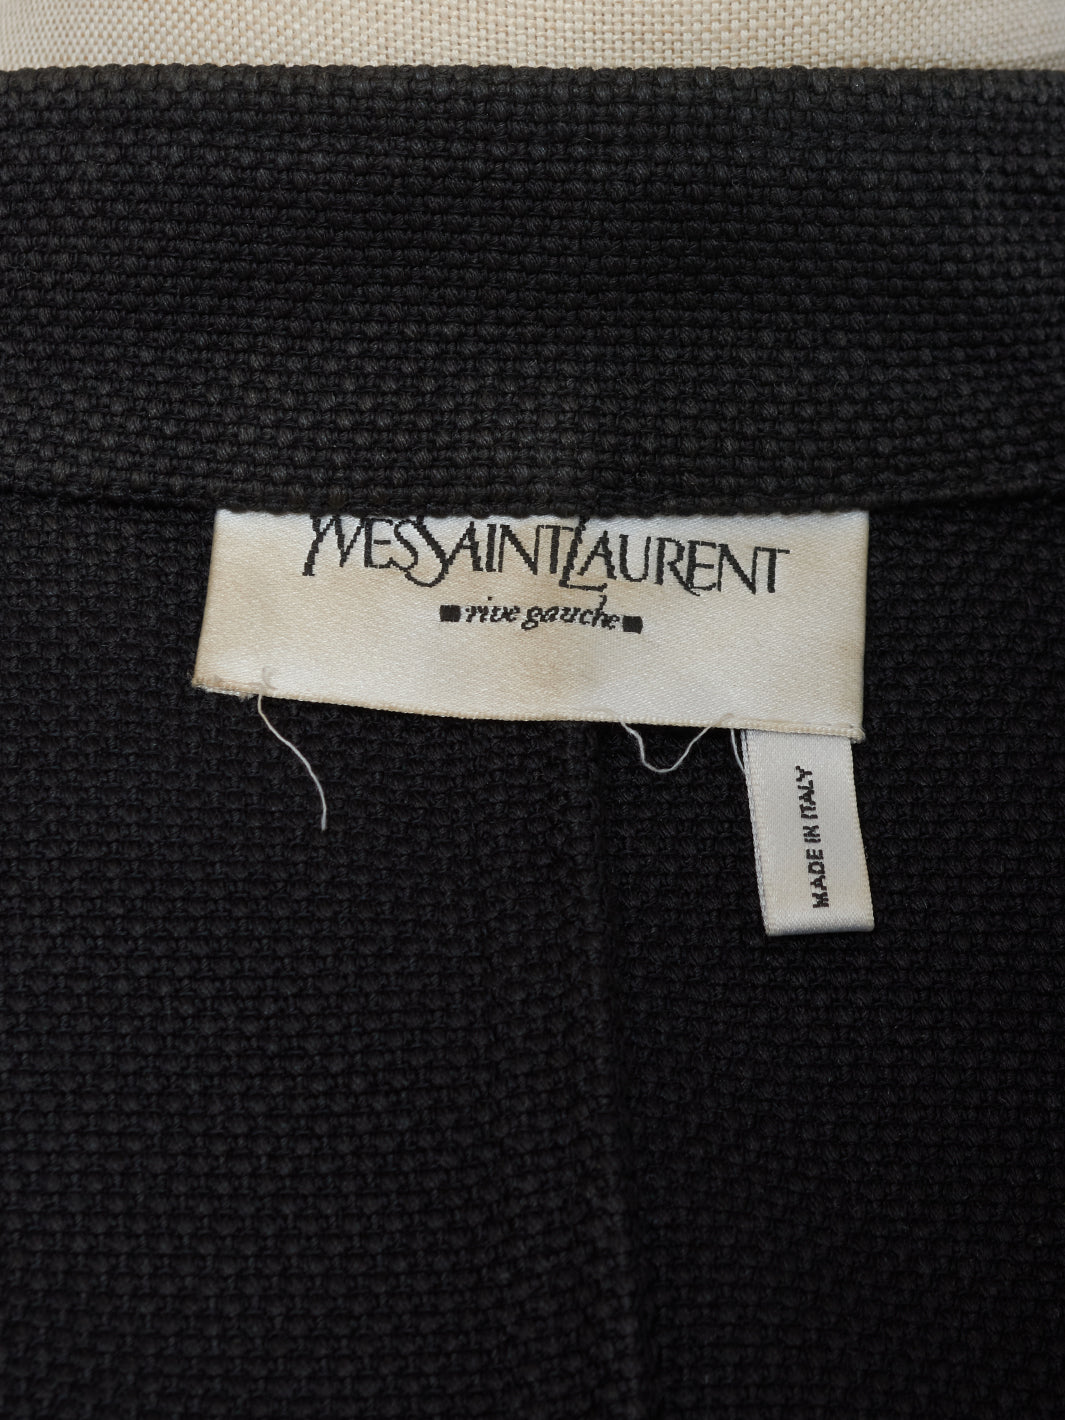 Yves Saint Laurent Saharan jacket in black cotton